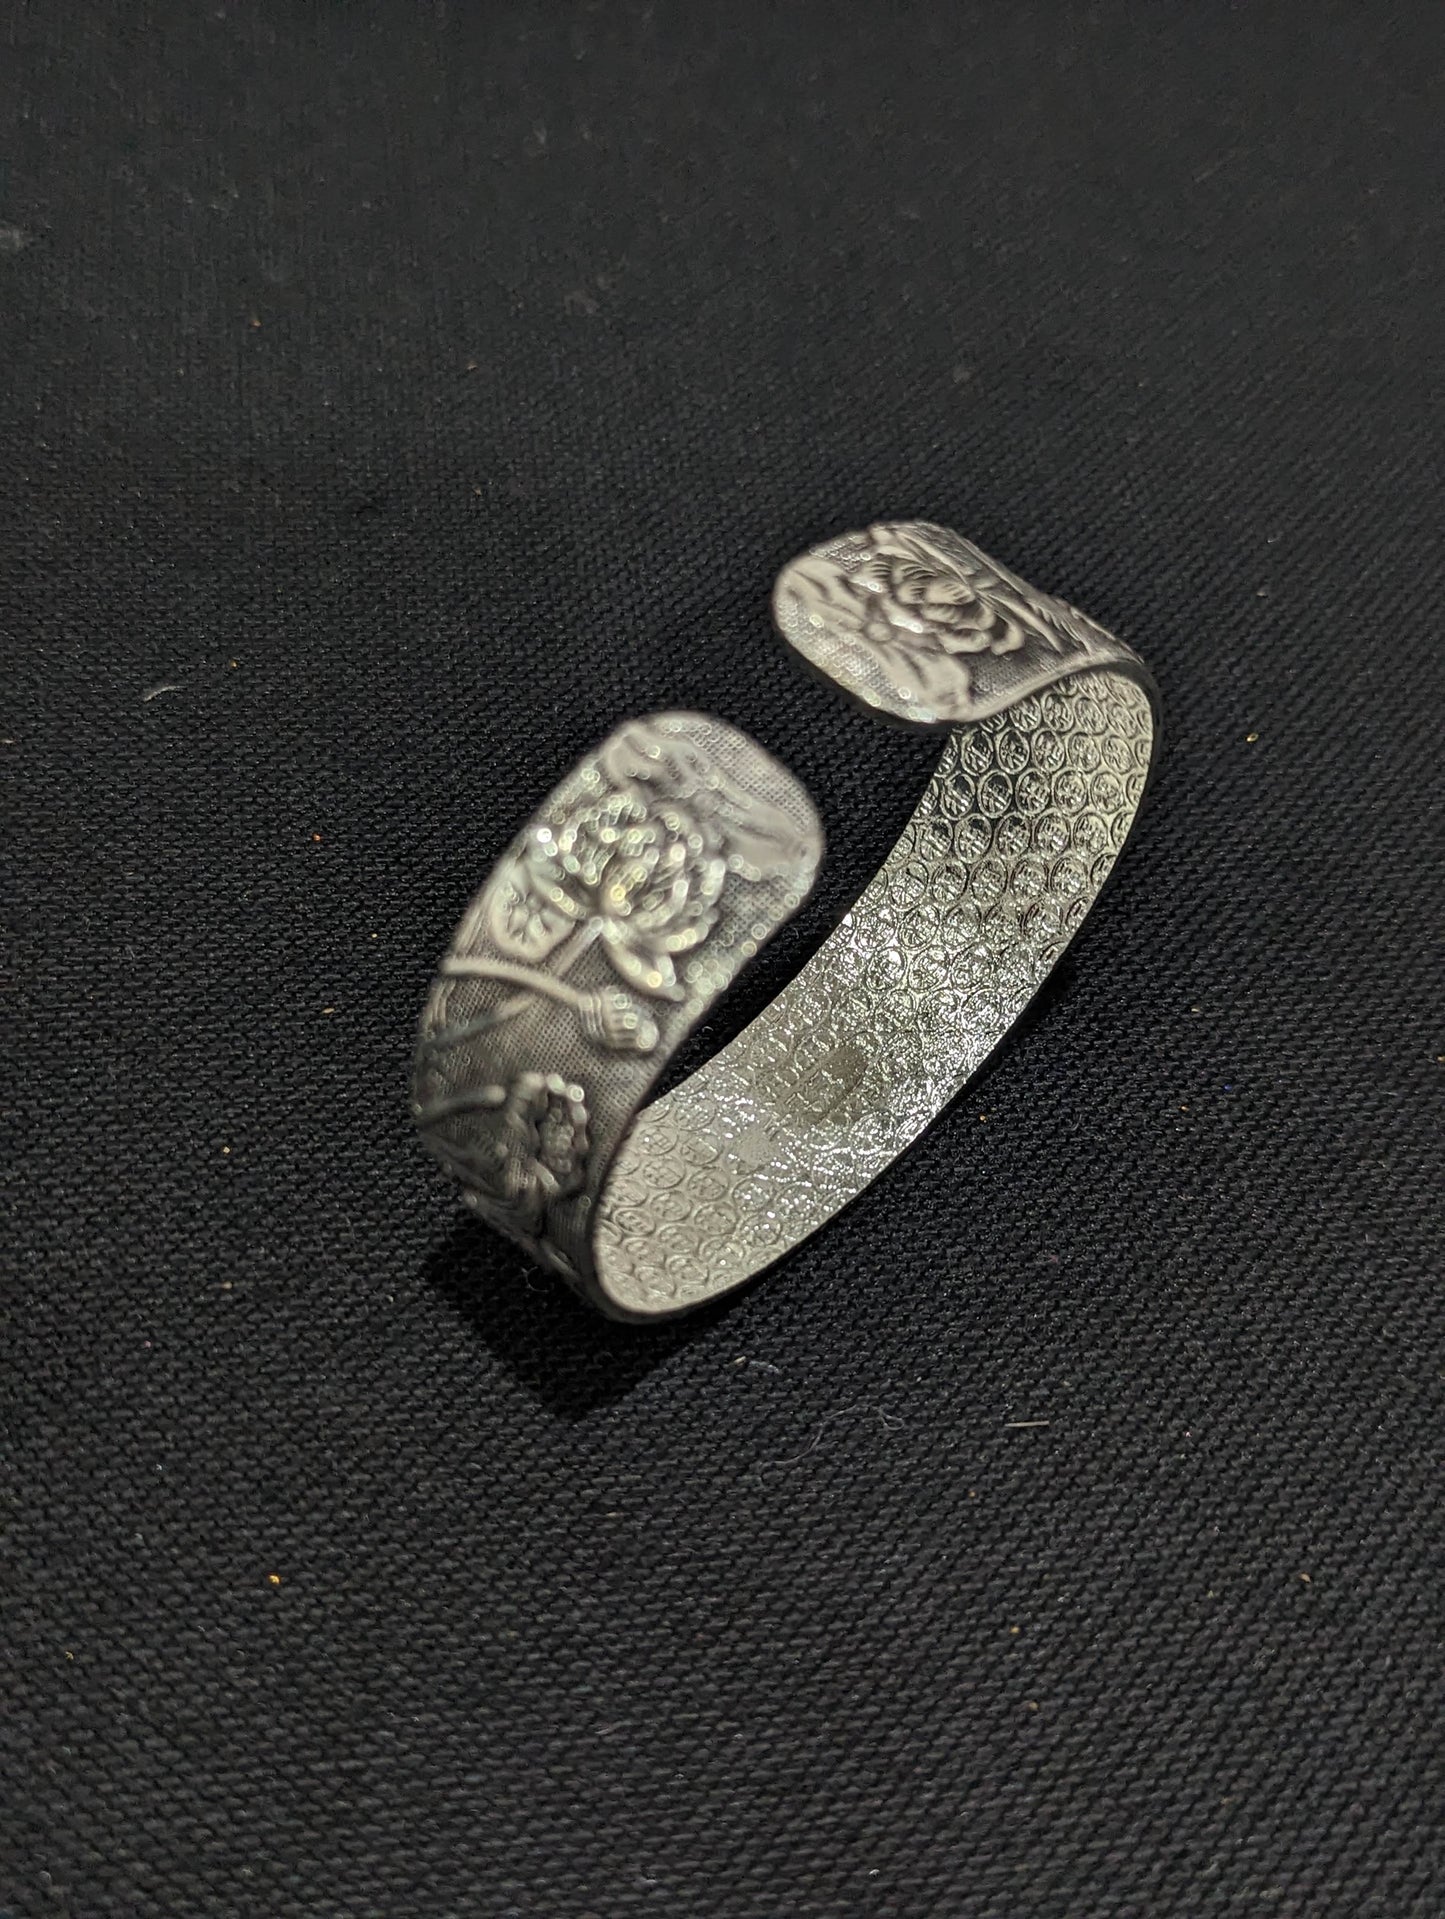 Antique silver oxidized kada - Fish Design - Simpliful